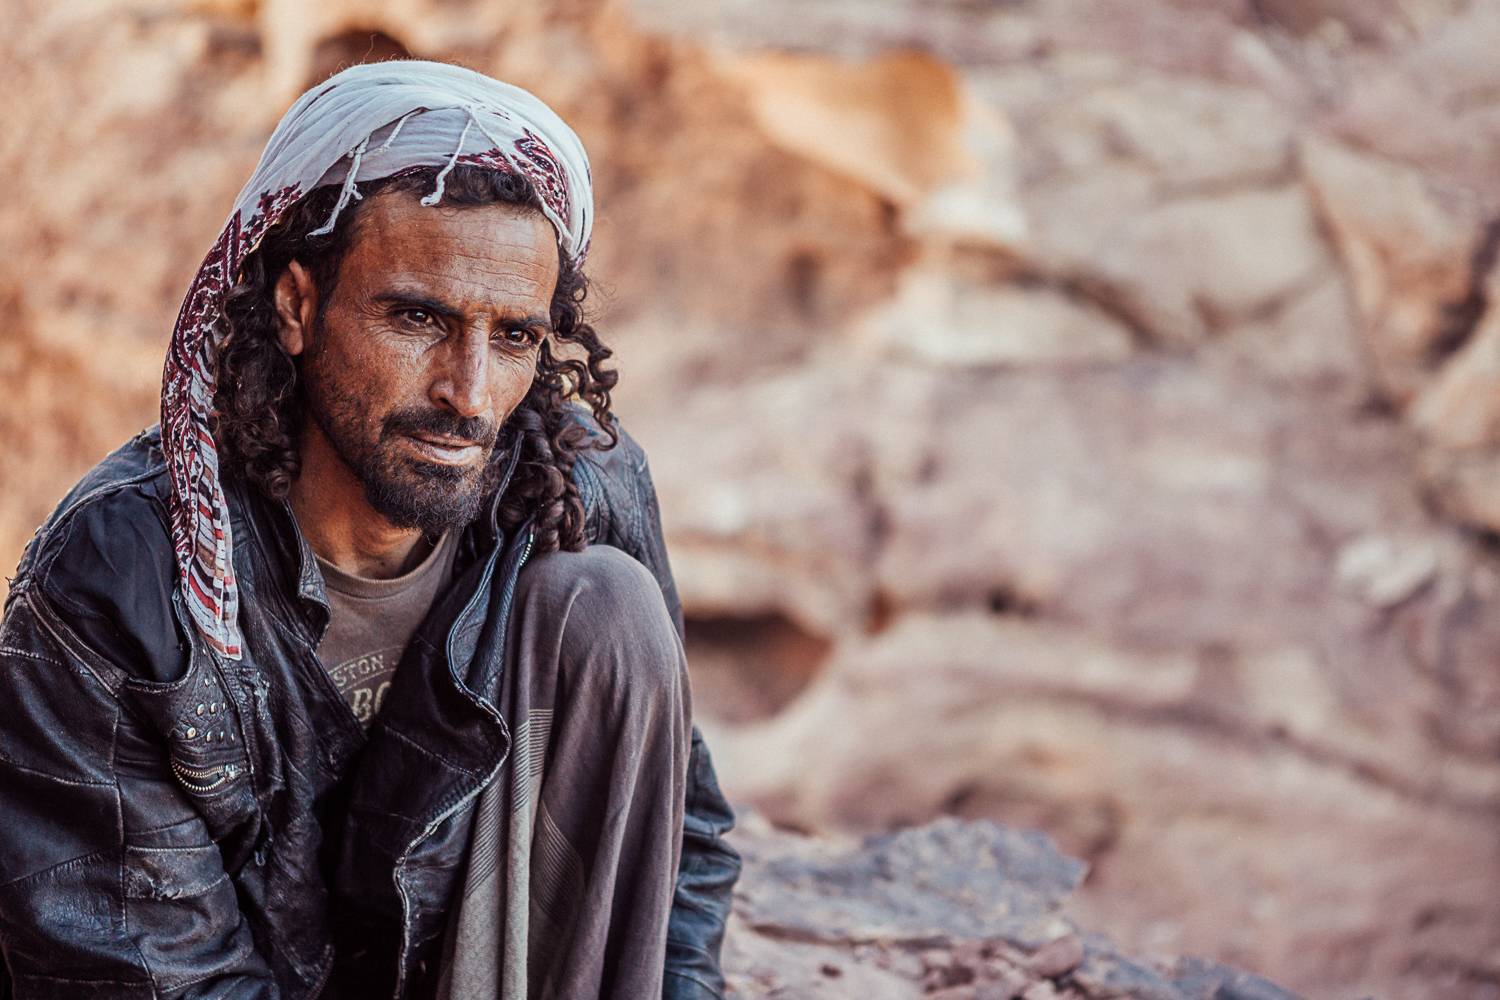 Bedouin man shares his stories and tea